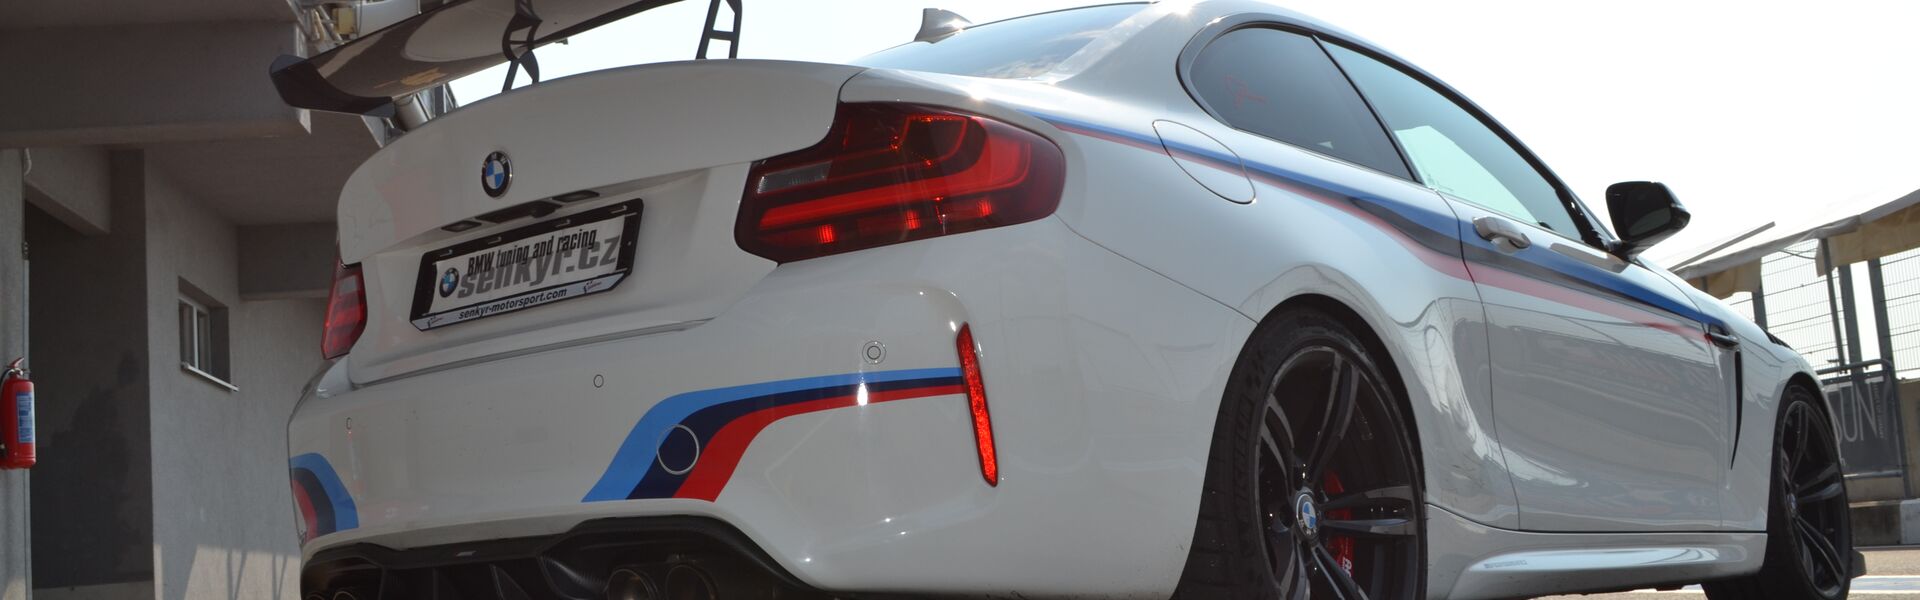 Bodykit/ Aerodynamické prvky pro automobil BMW M3 E36